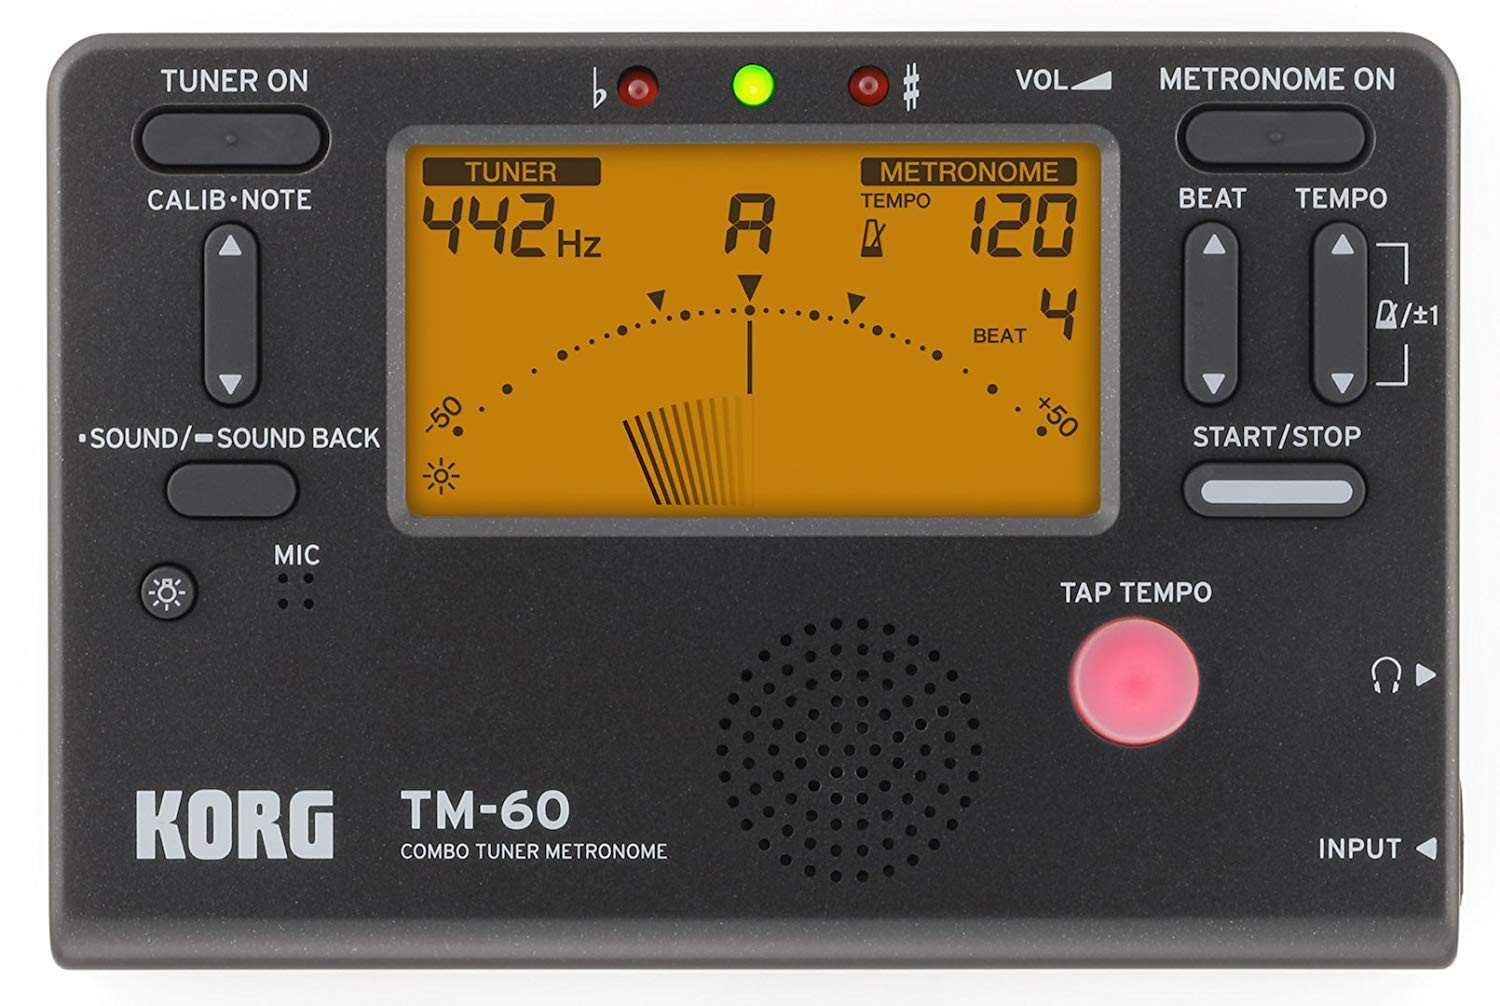 Korg TM-60 Compact Tuner and Metronome